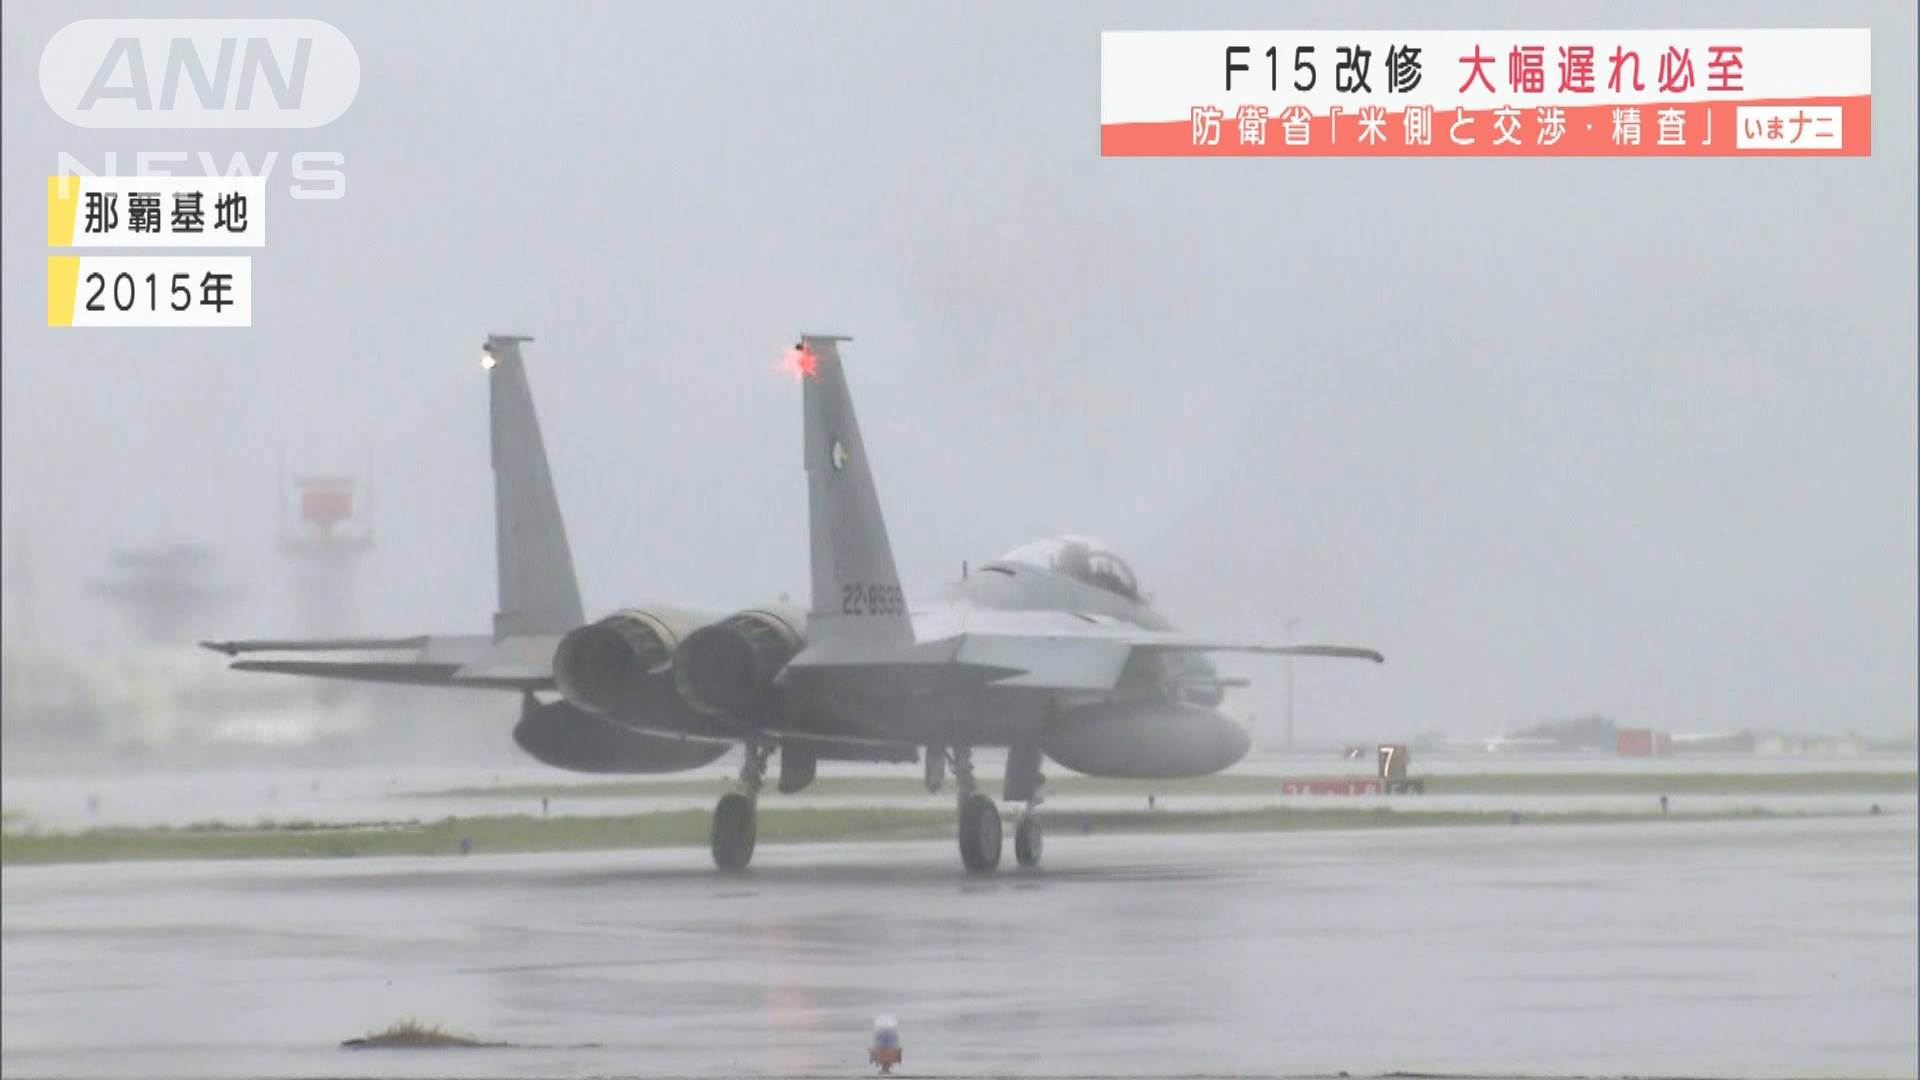 F15改修が大幅遅れ見通し 初期費用膨れ1000億円超 テレ朝news テレビ朝日のニュースサイト